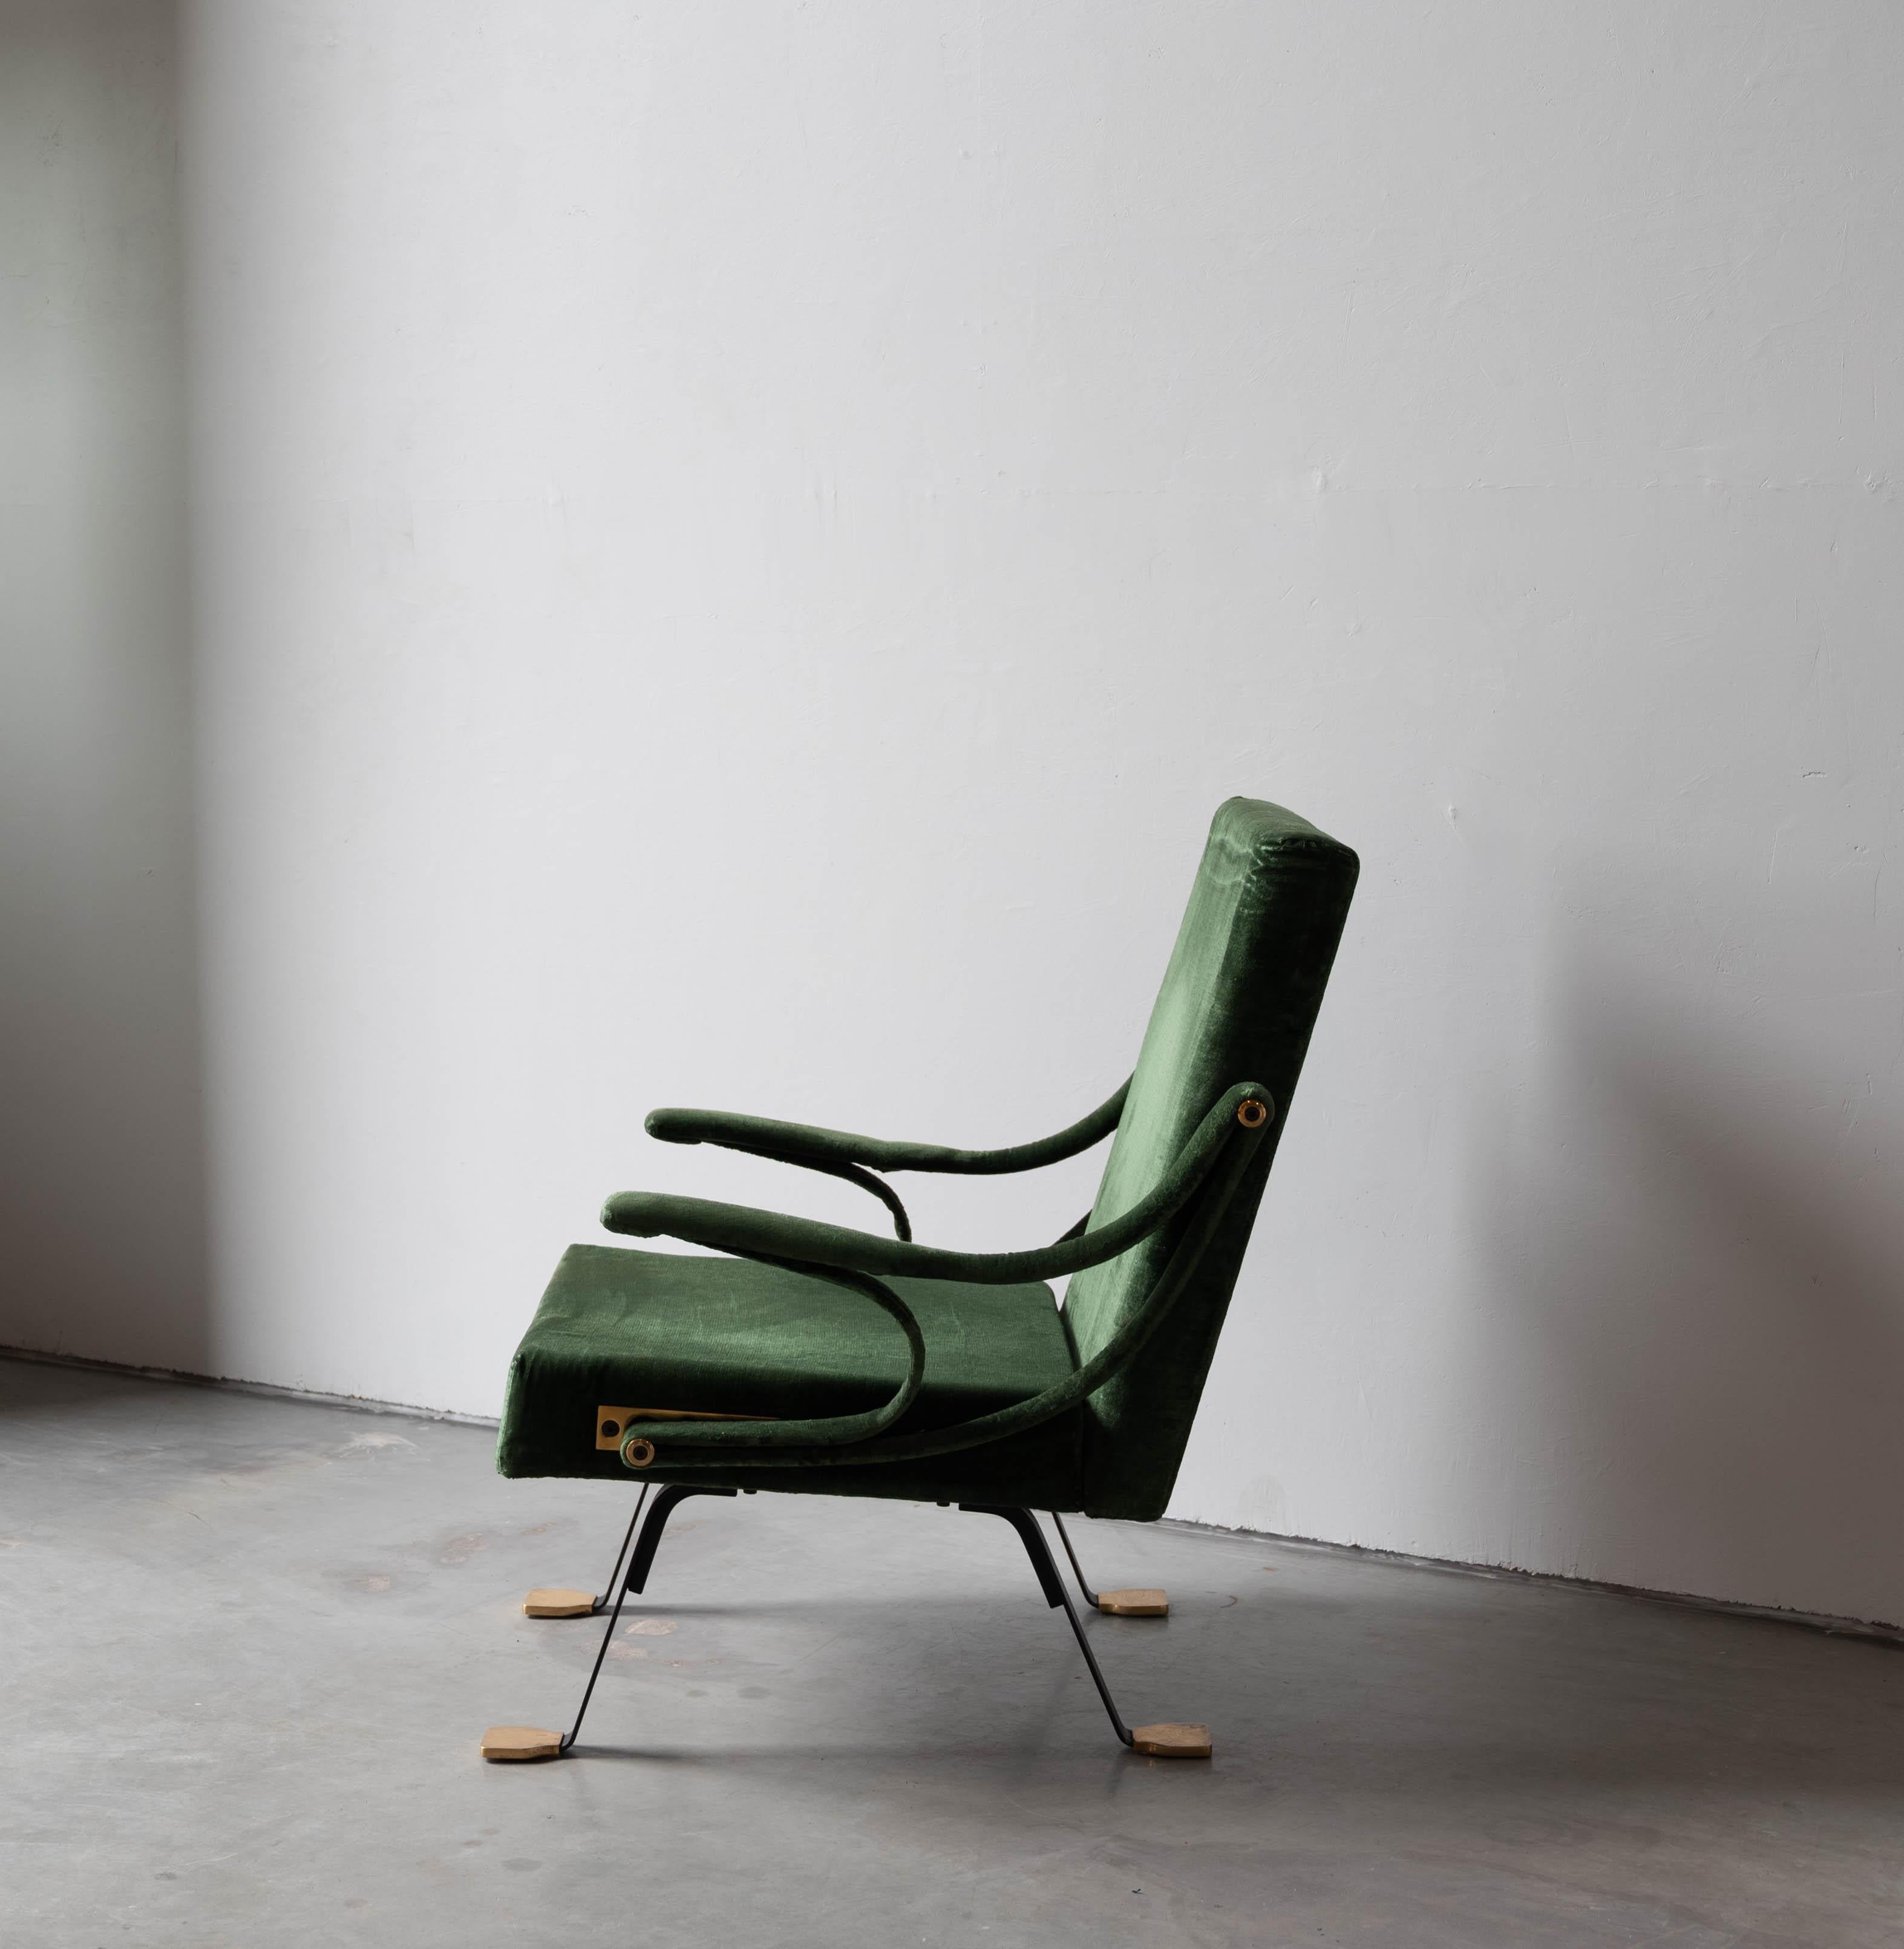 Italian Ignazio Gardella, Lounge Chair, Brass, Metal, Green Velvet, Gavina, Italy, 1957